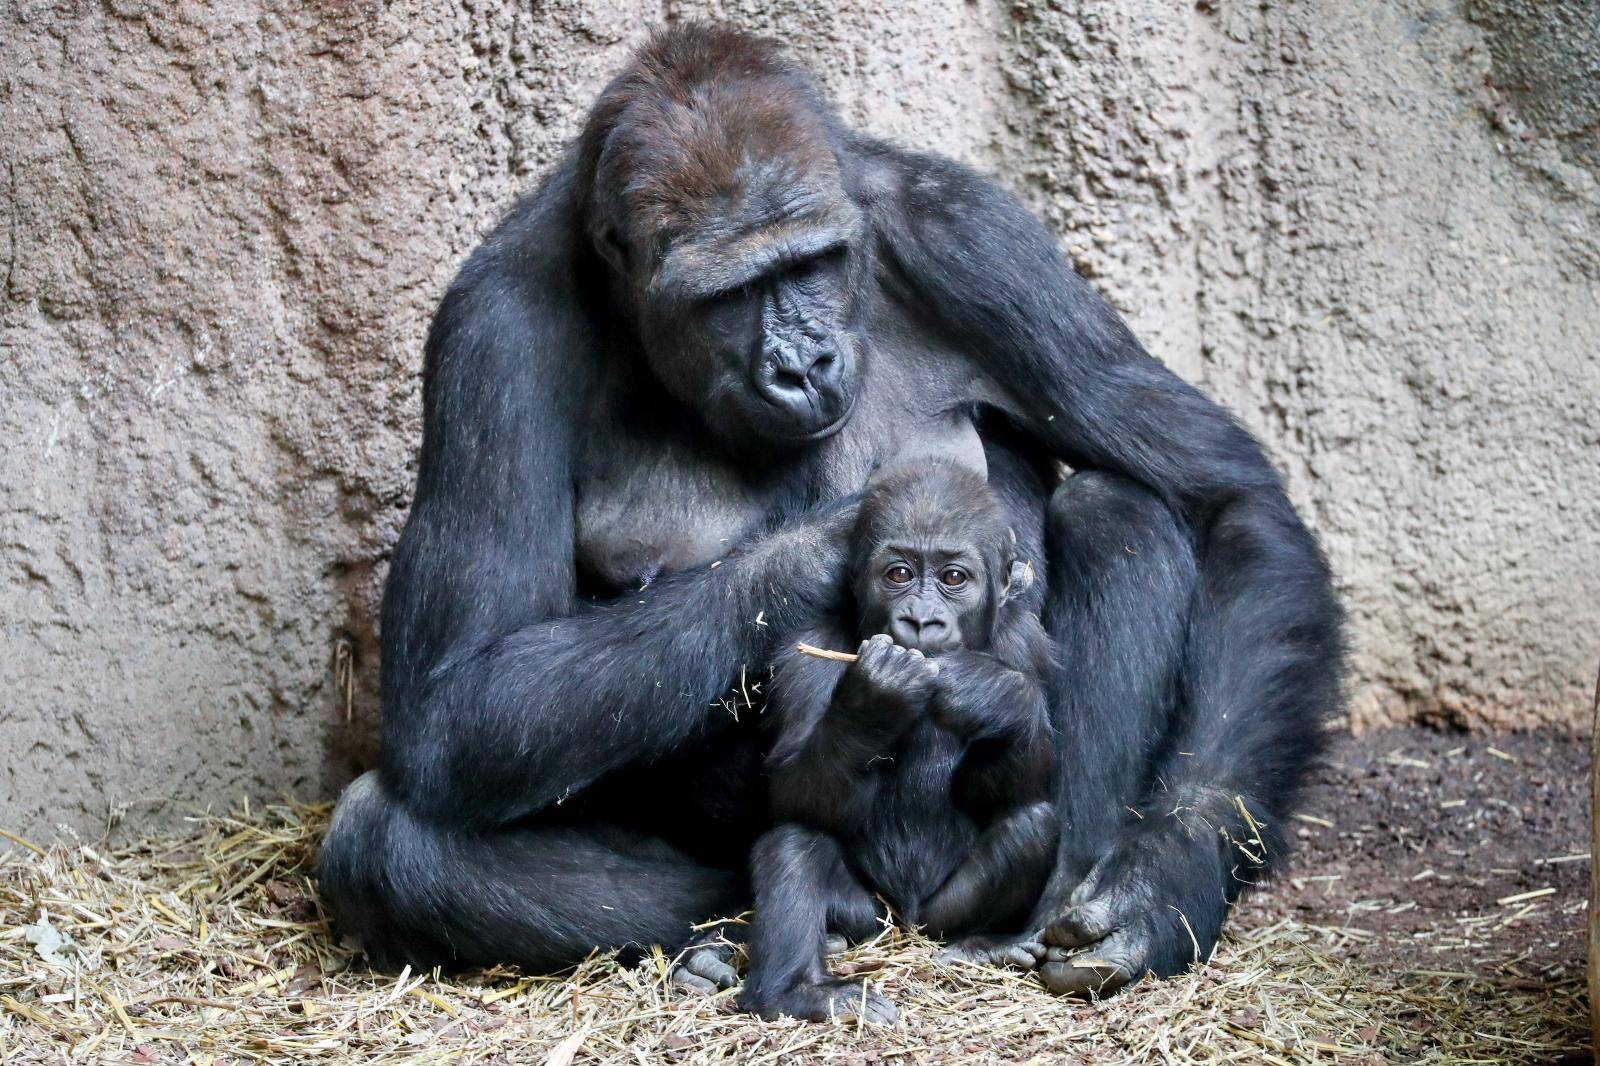 Gorilla baby Kianga at Leipzig zoo